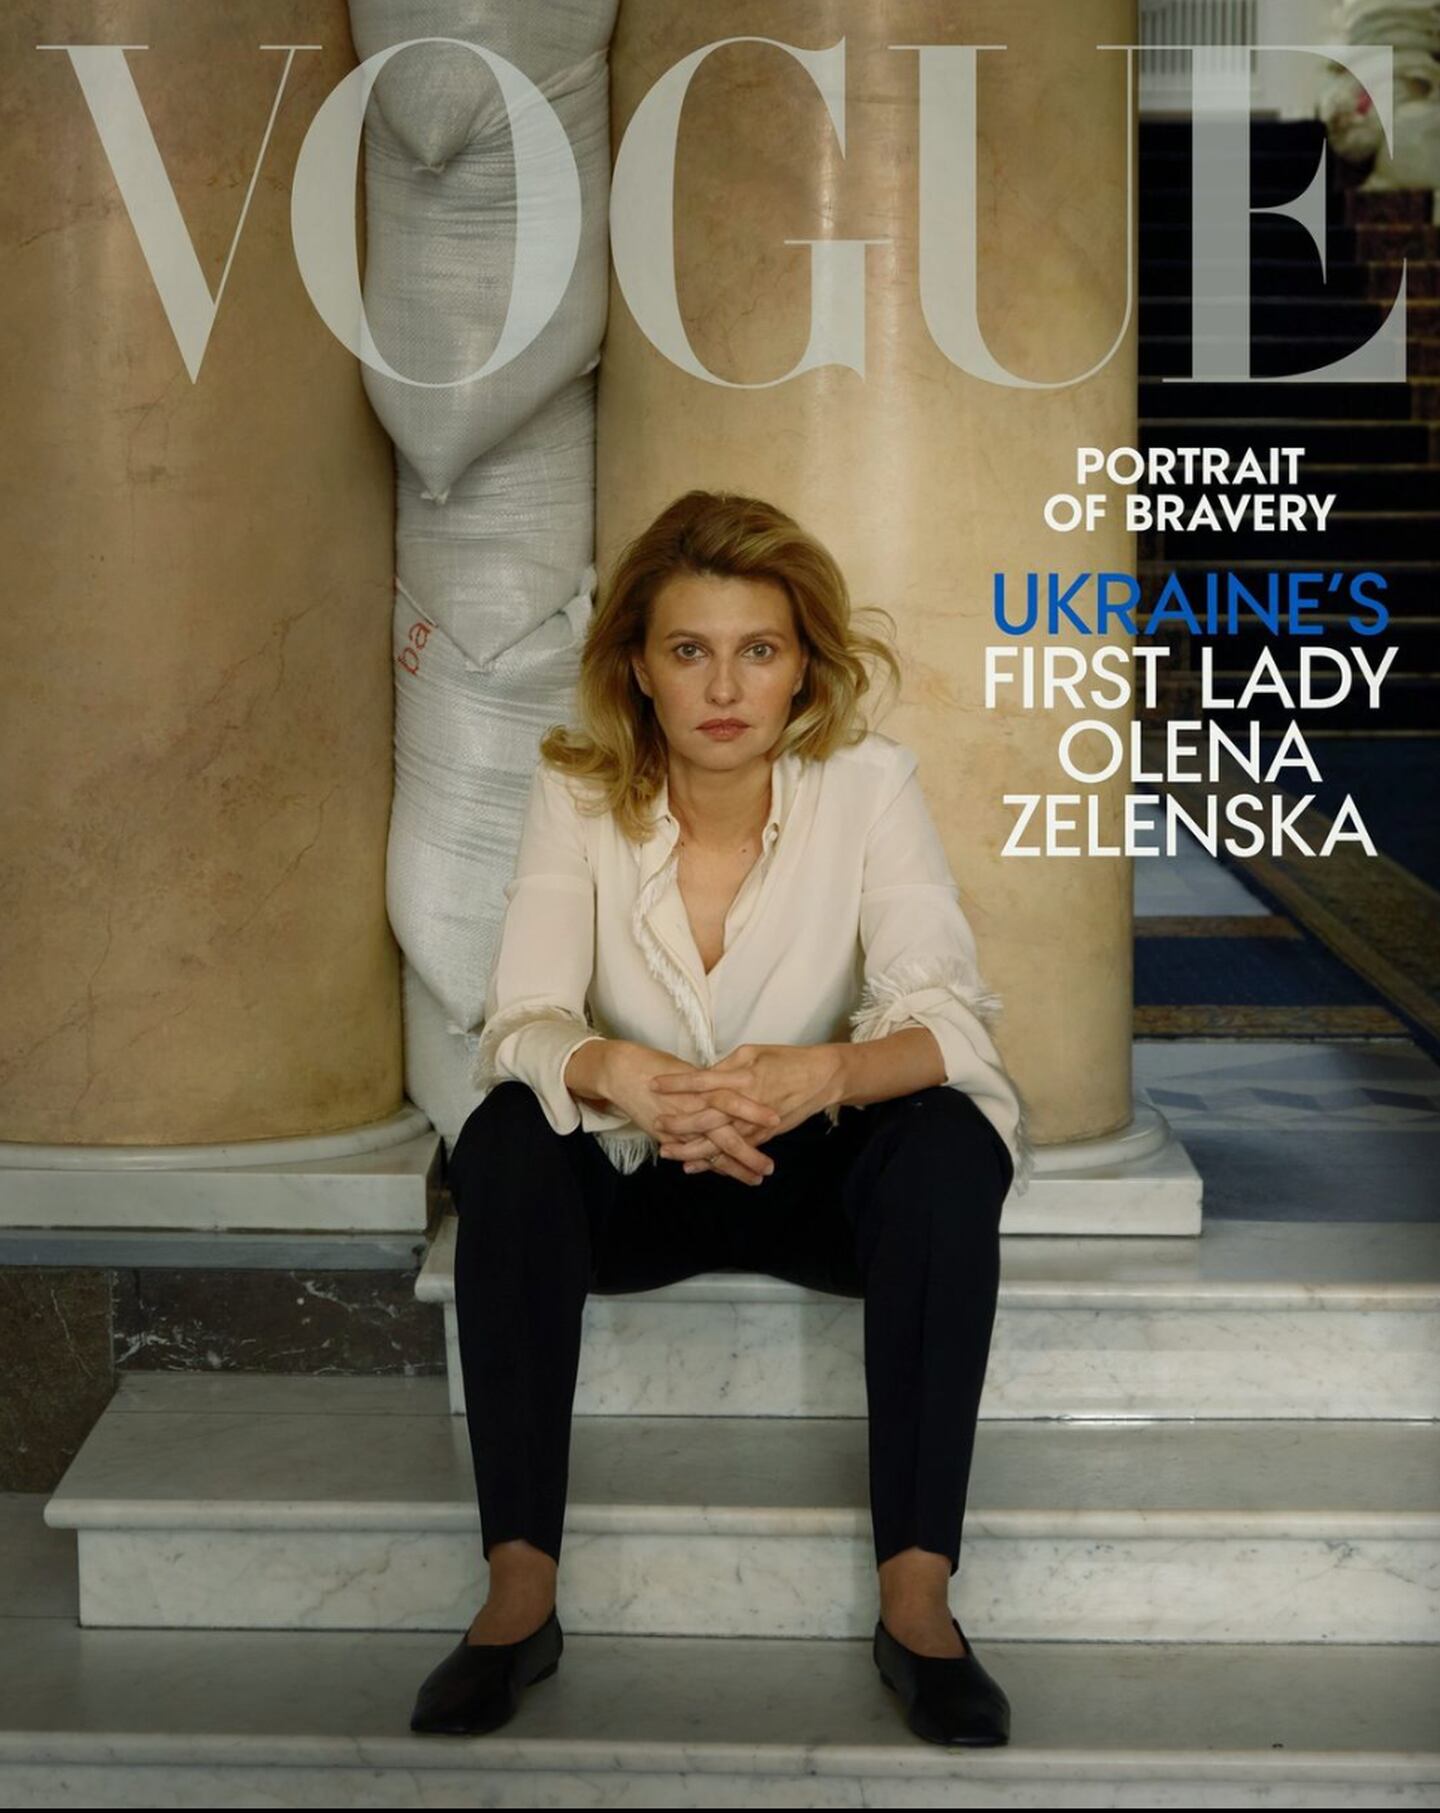 Vogue's digital cover featuring Ukraine's first lady, Olena Zelenska.